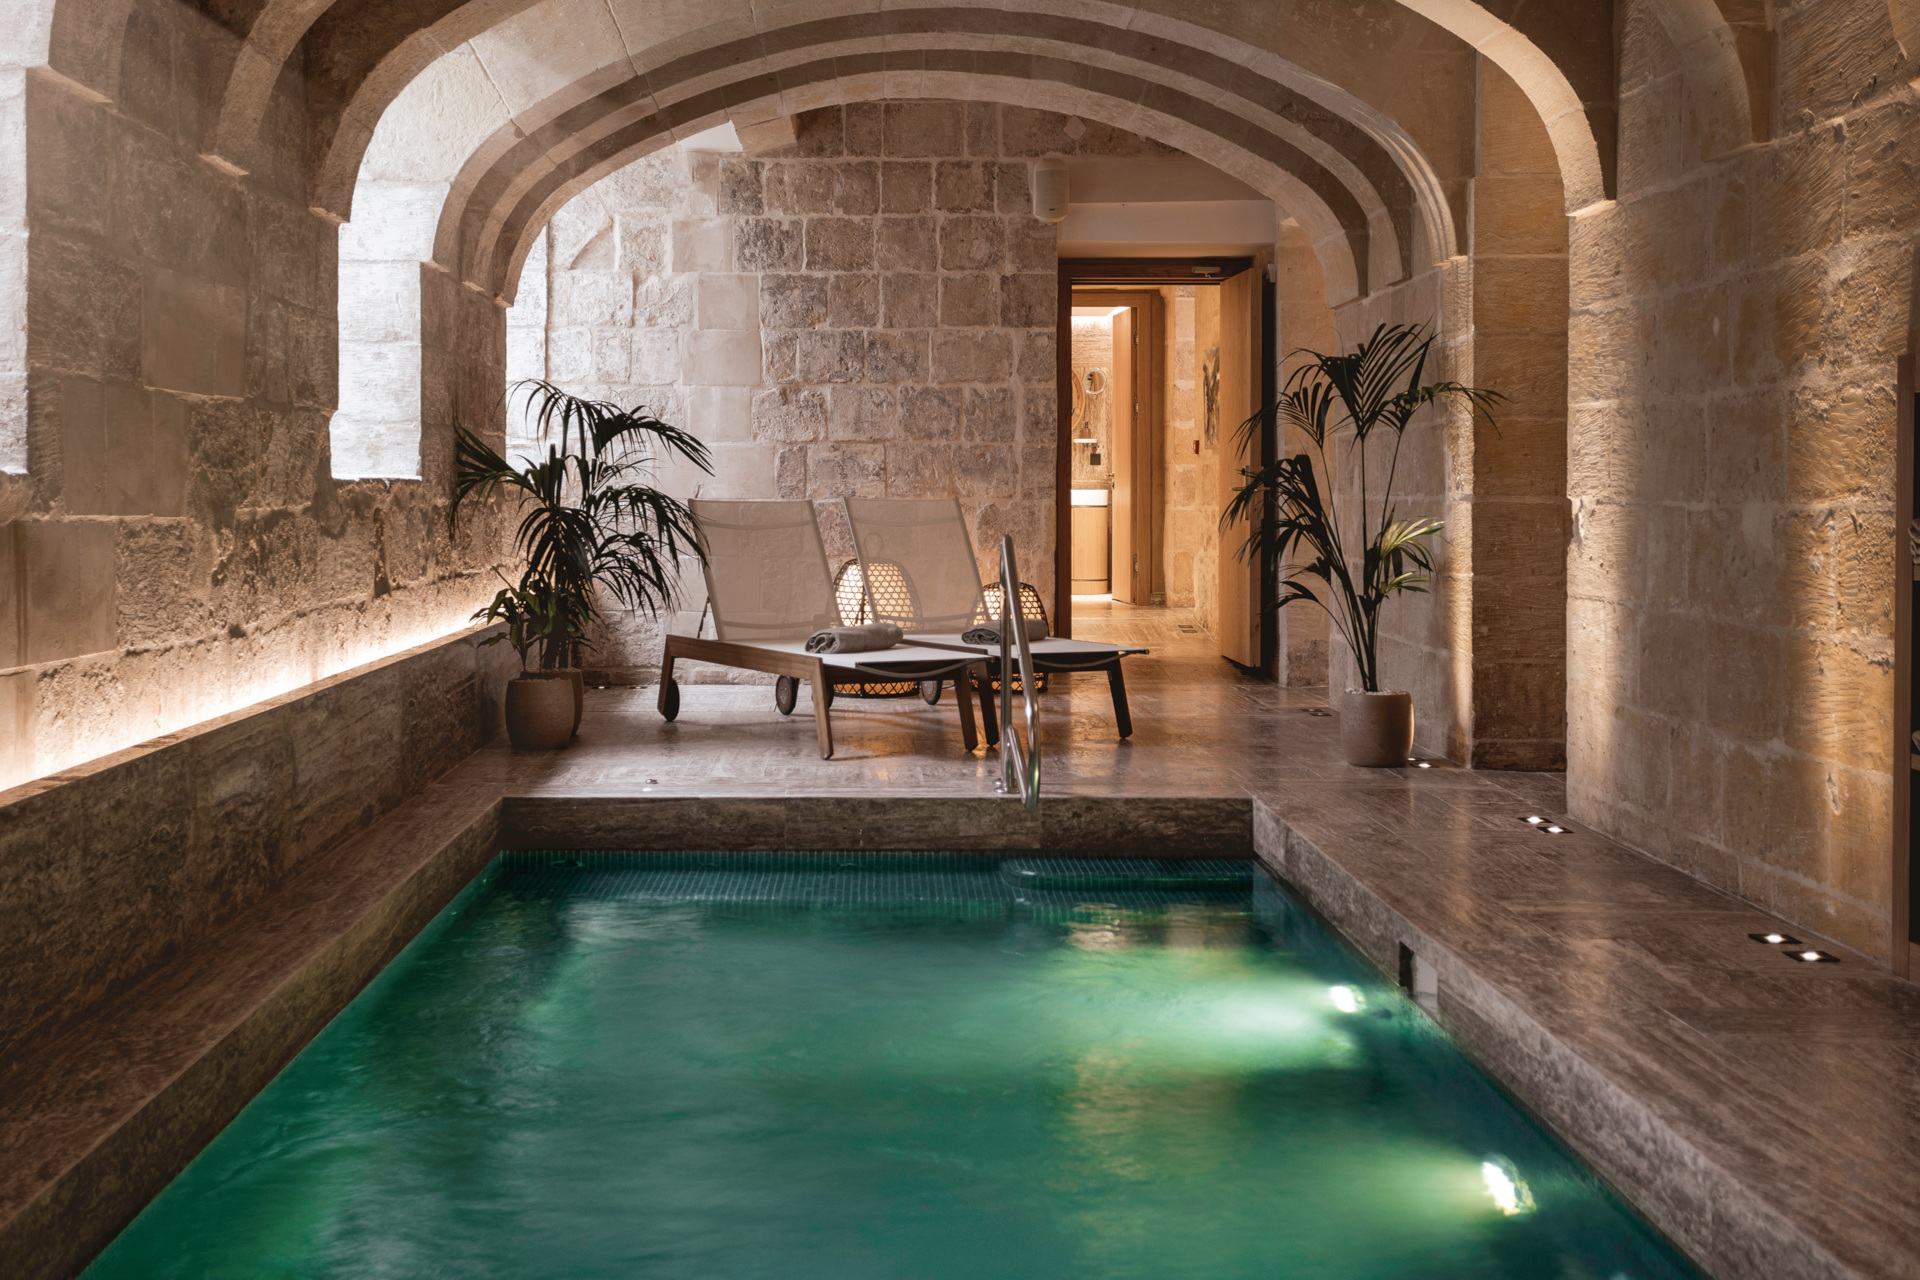 A spa pool in a brick room